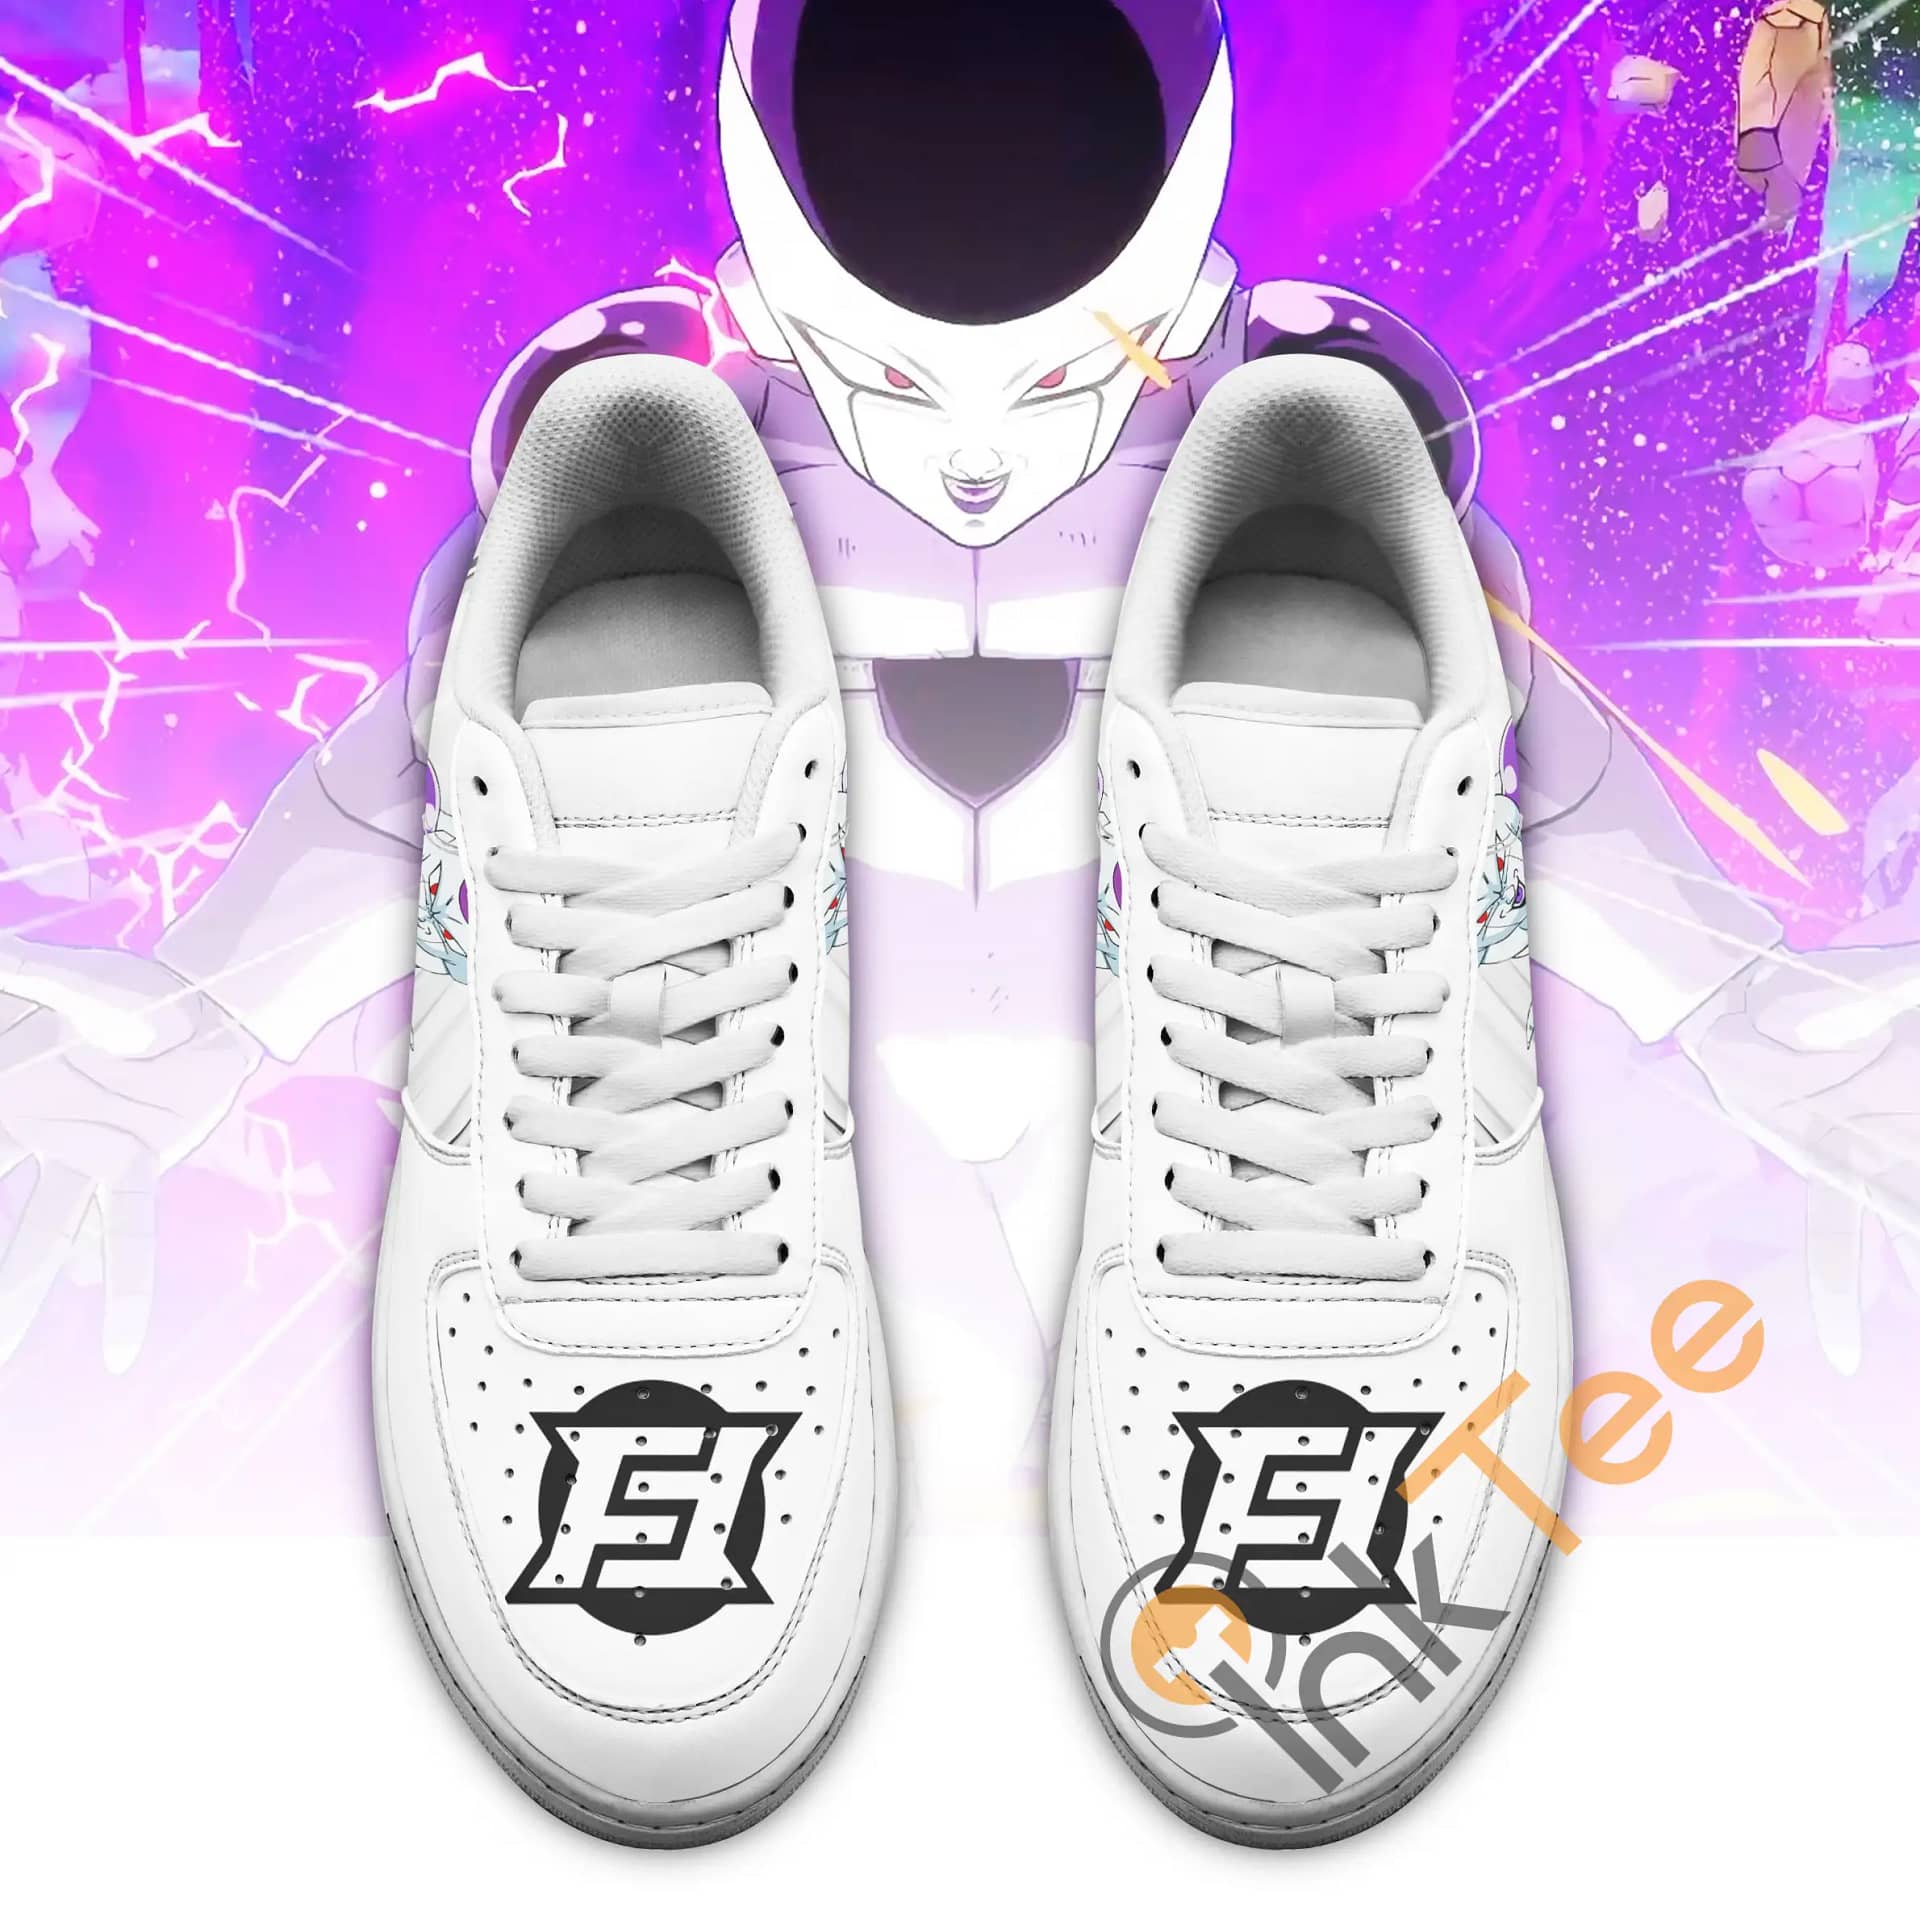 Frieza Custom Dragon Ball Z Anime Amazon Nike Air Force Shoes